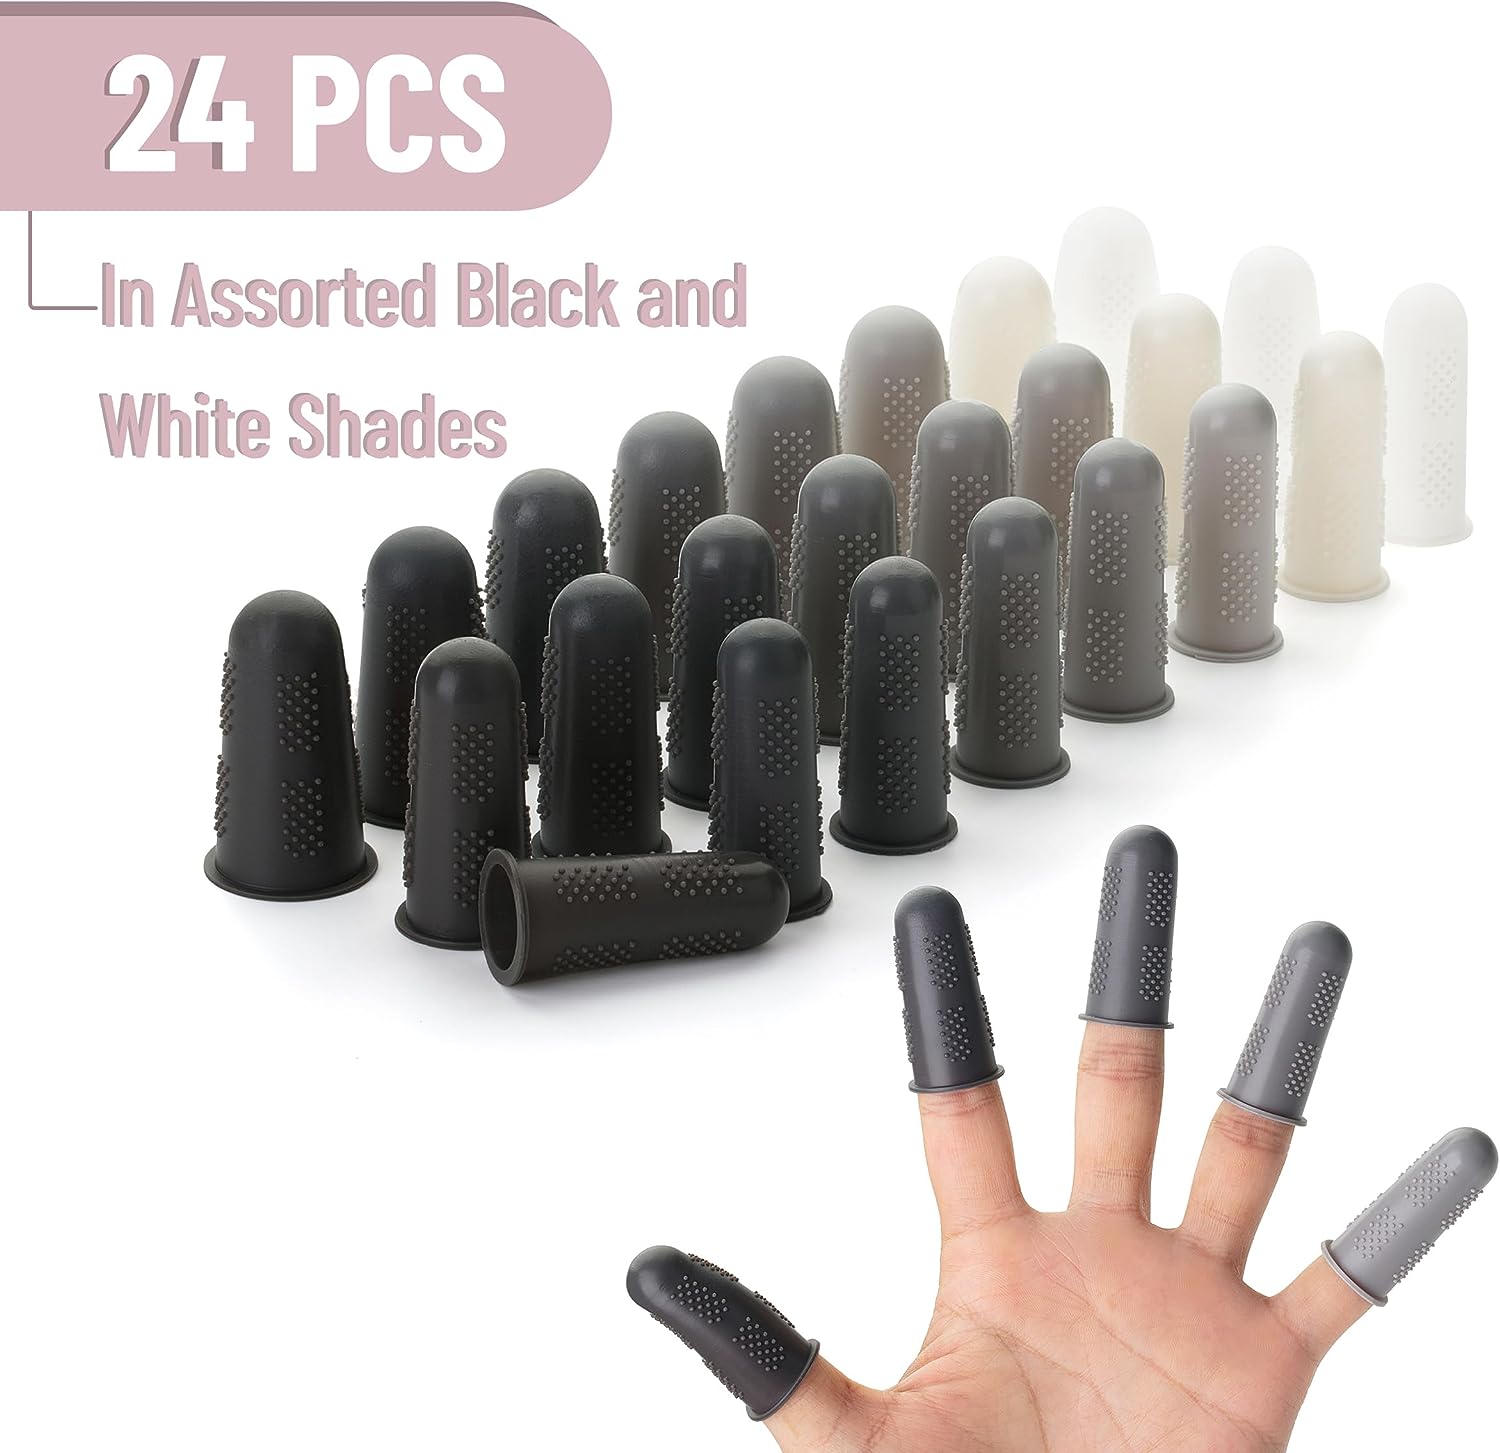 Hot Glue Gun Finger Protectors, 24 pcs, Black and White Shades